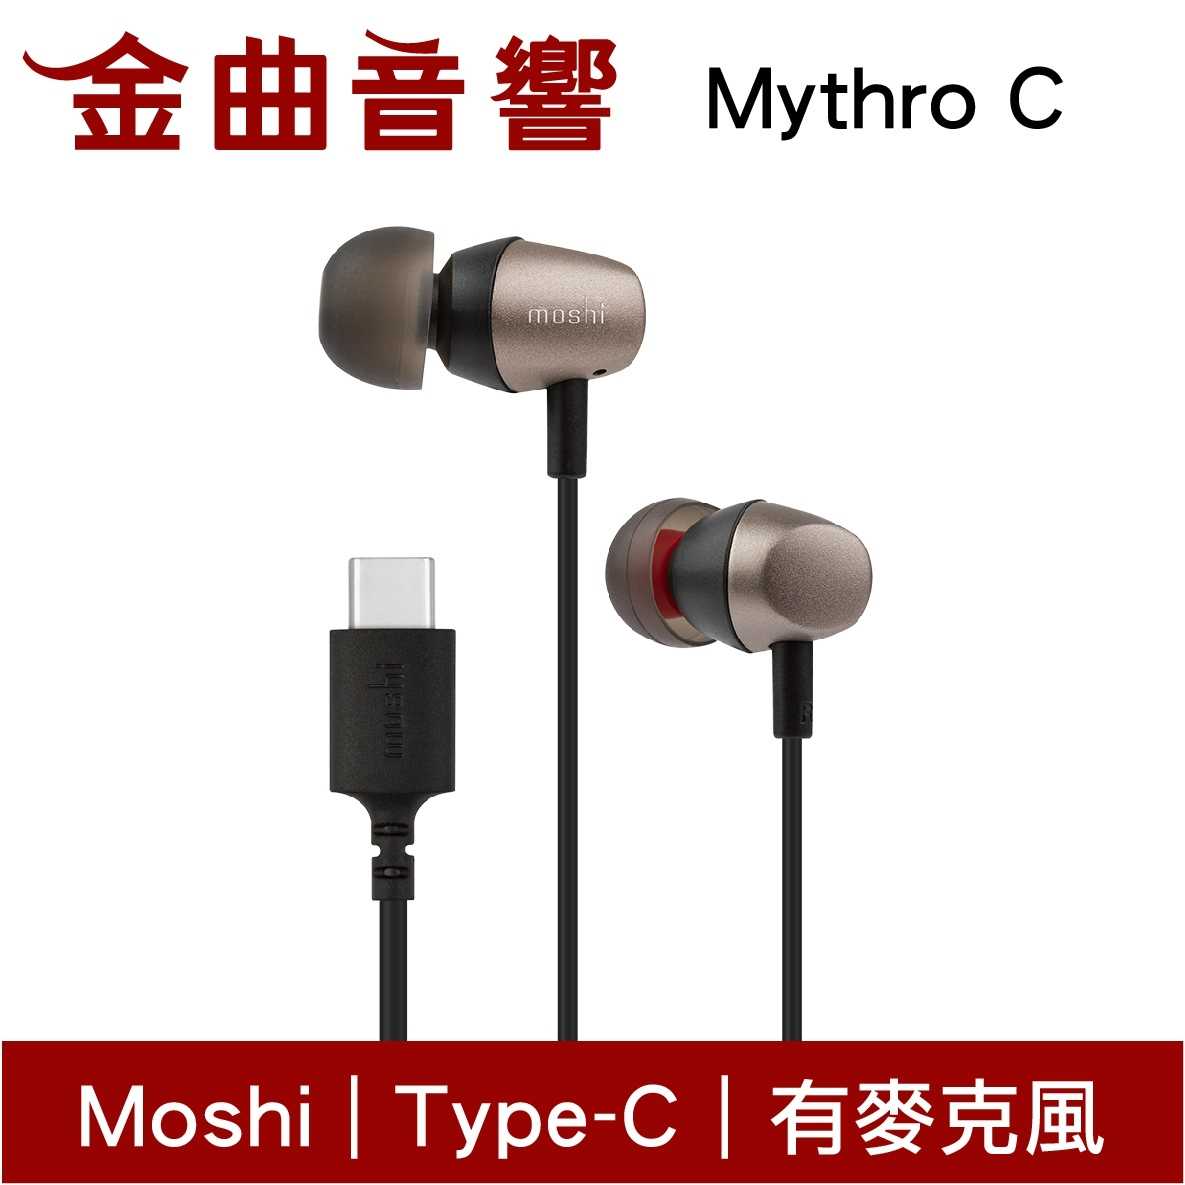 Moshi Mythro C USB Type-C 鈦灰色 耳機 麥克風耳機 | 金曲音響